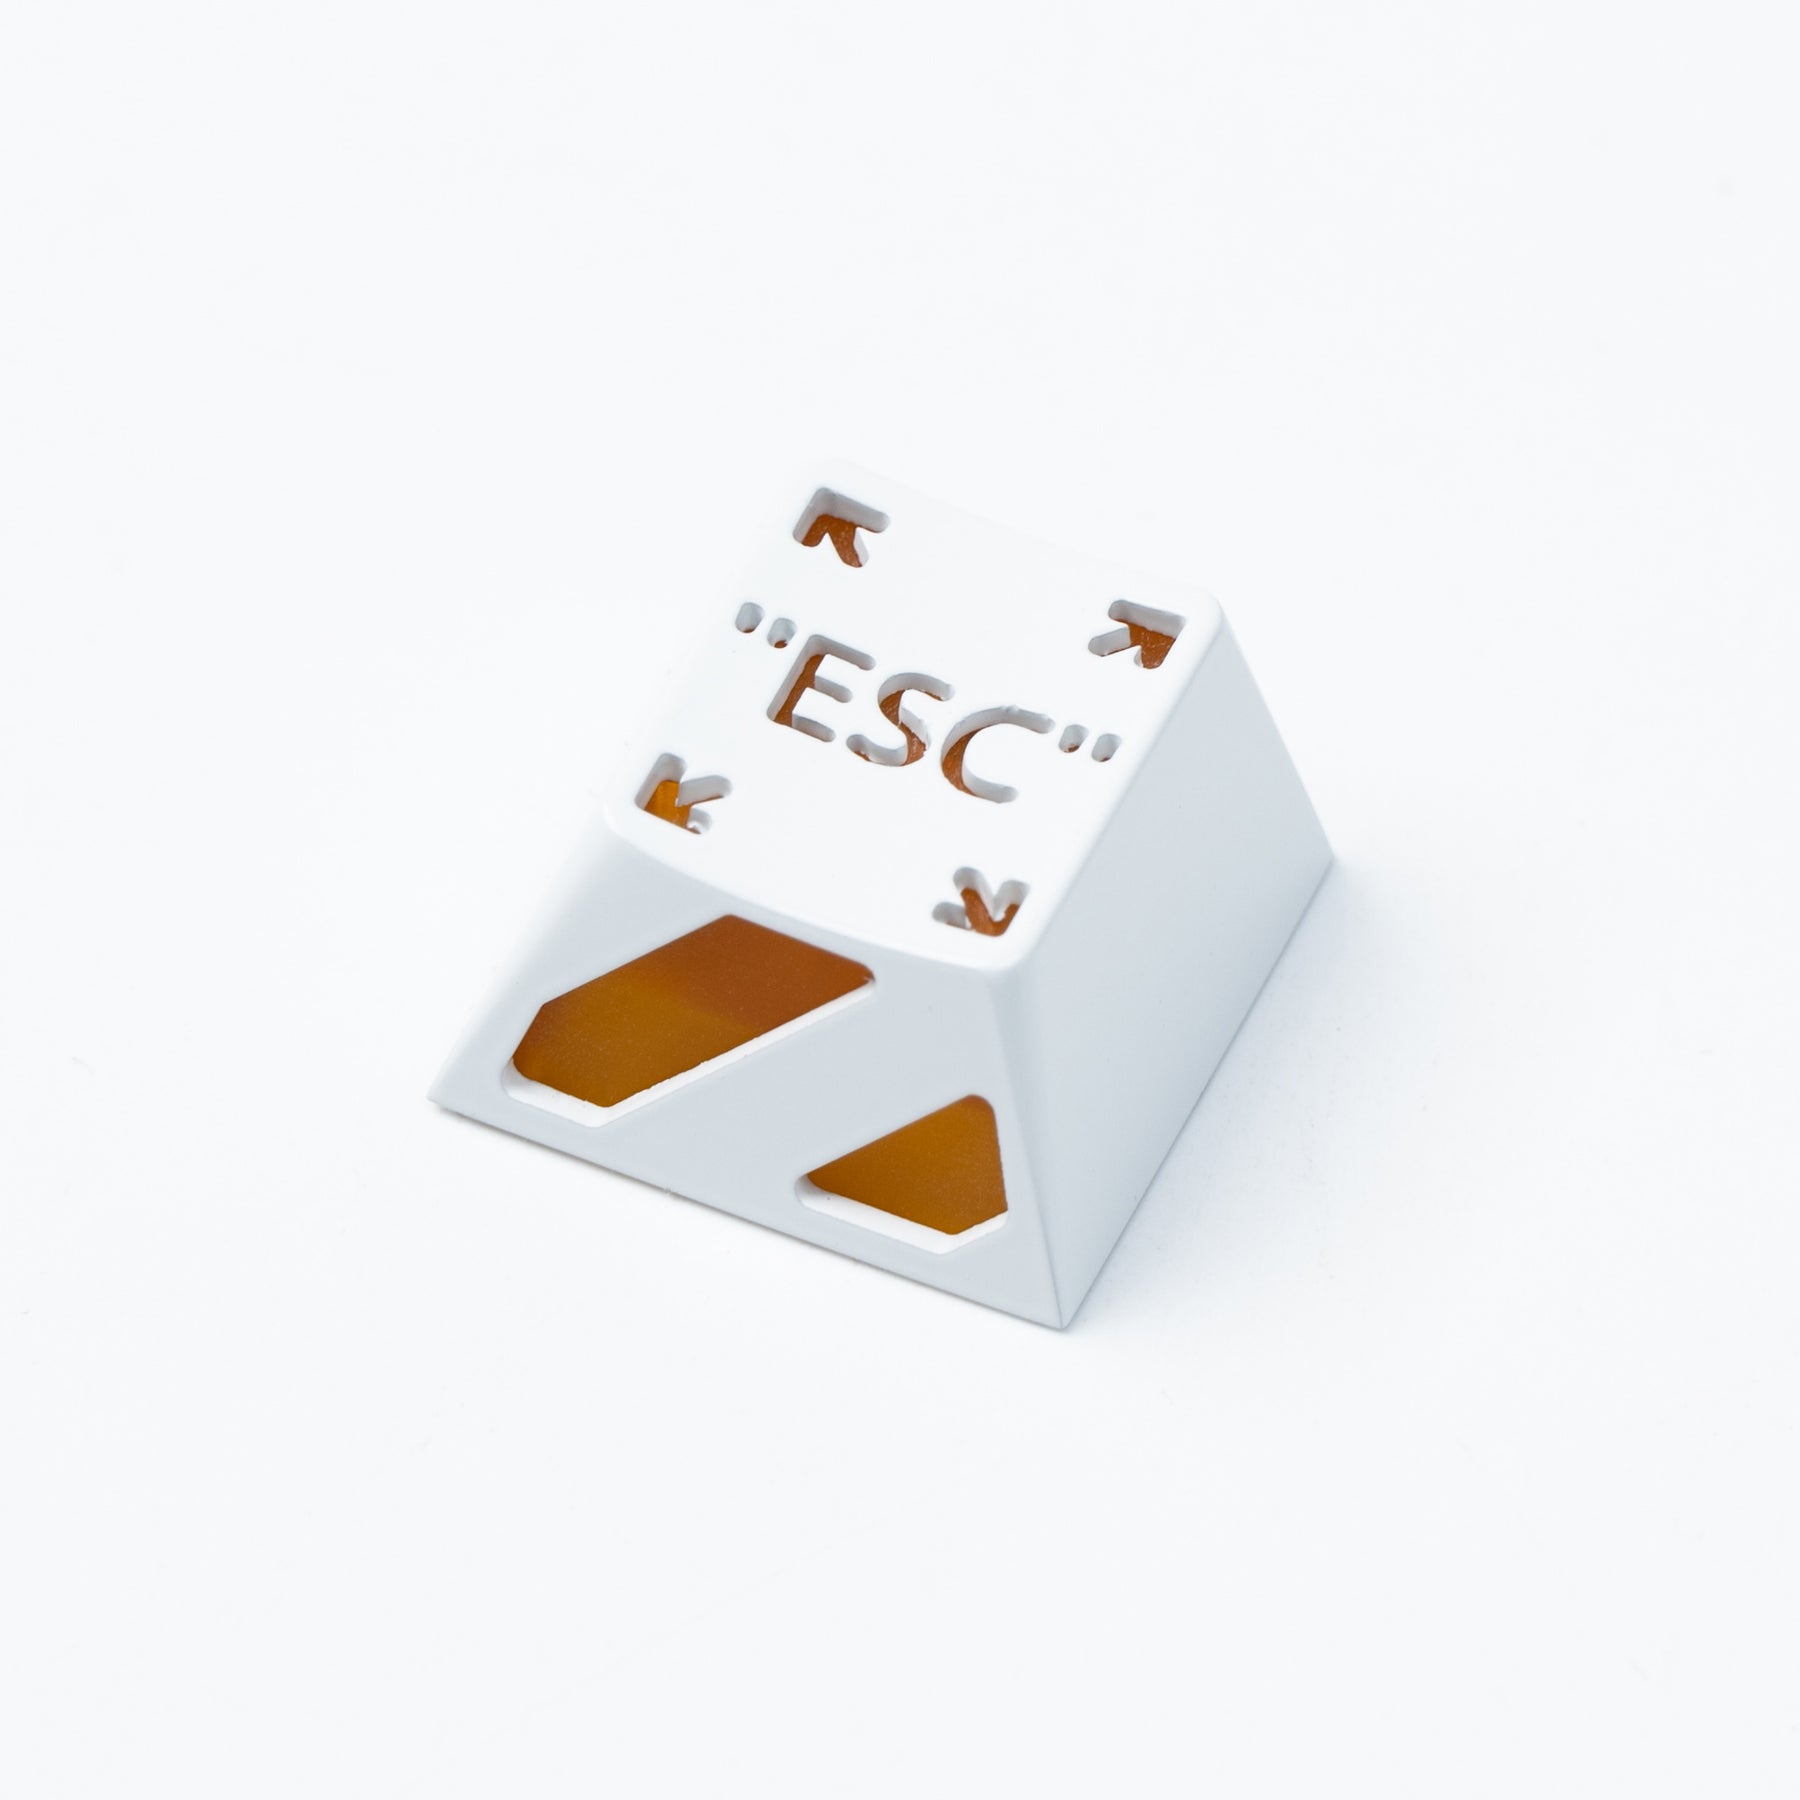 Leertaste/ESC/Eingabetaste, handgefertigte Tastenkappe aus Aluminiumlegierung